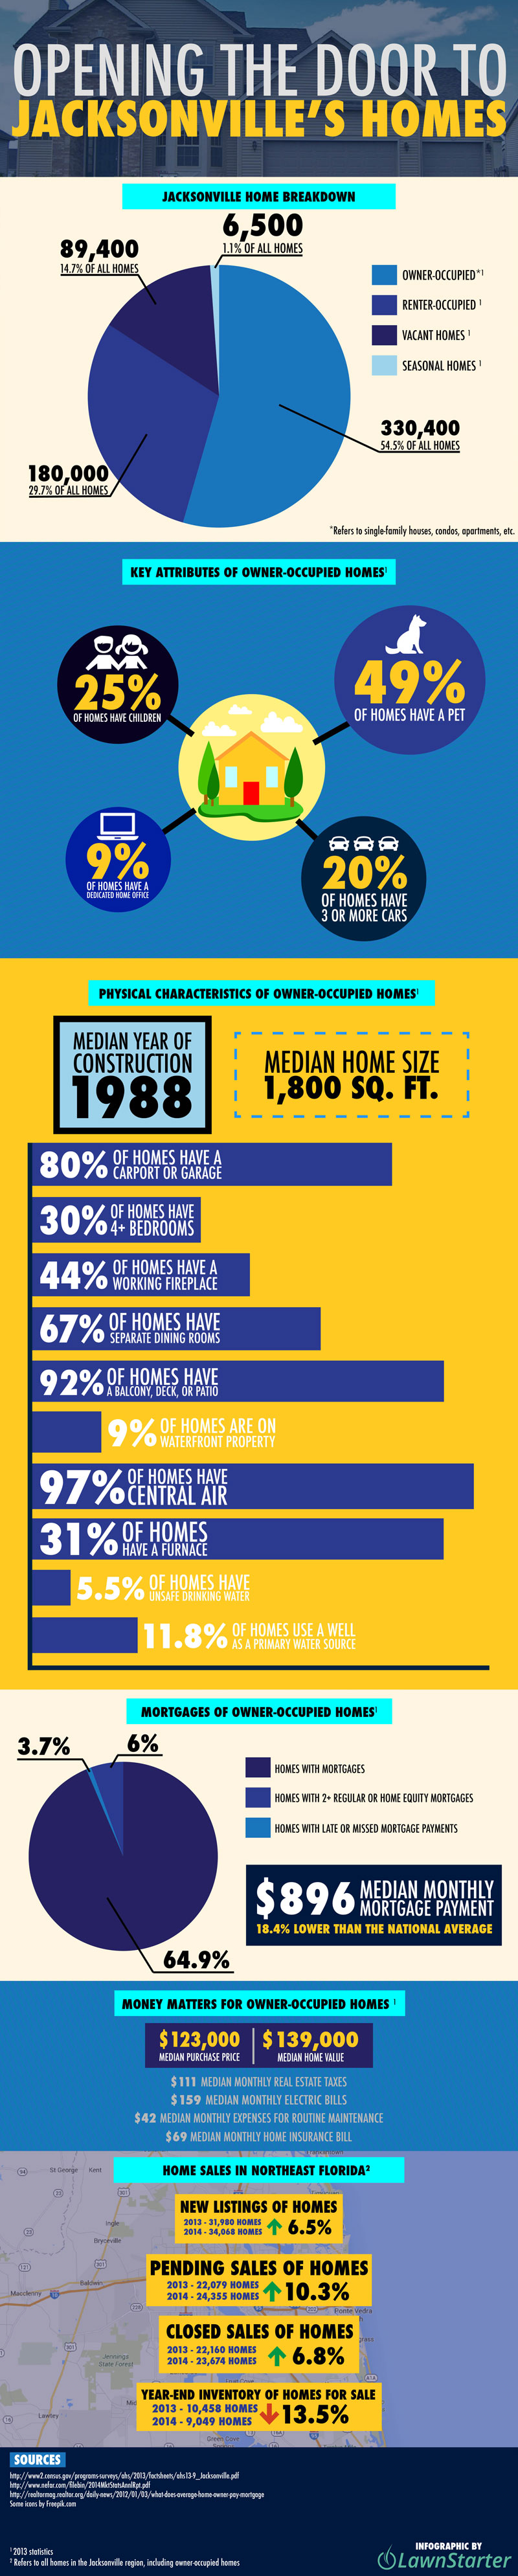 Opening the Door to Jacksonville's Homes - Infographic